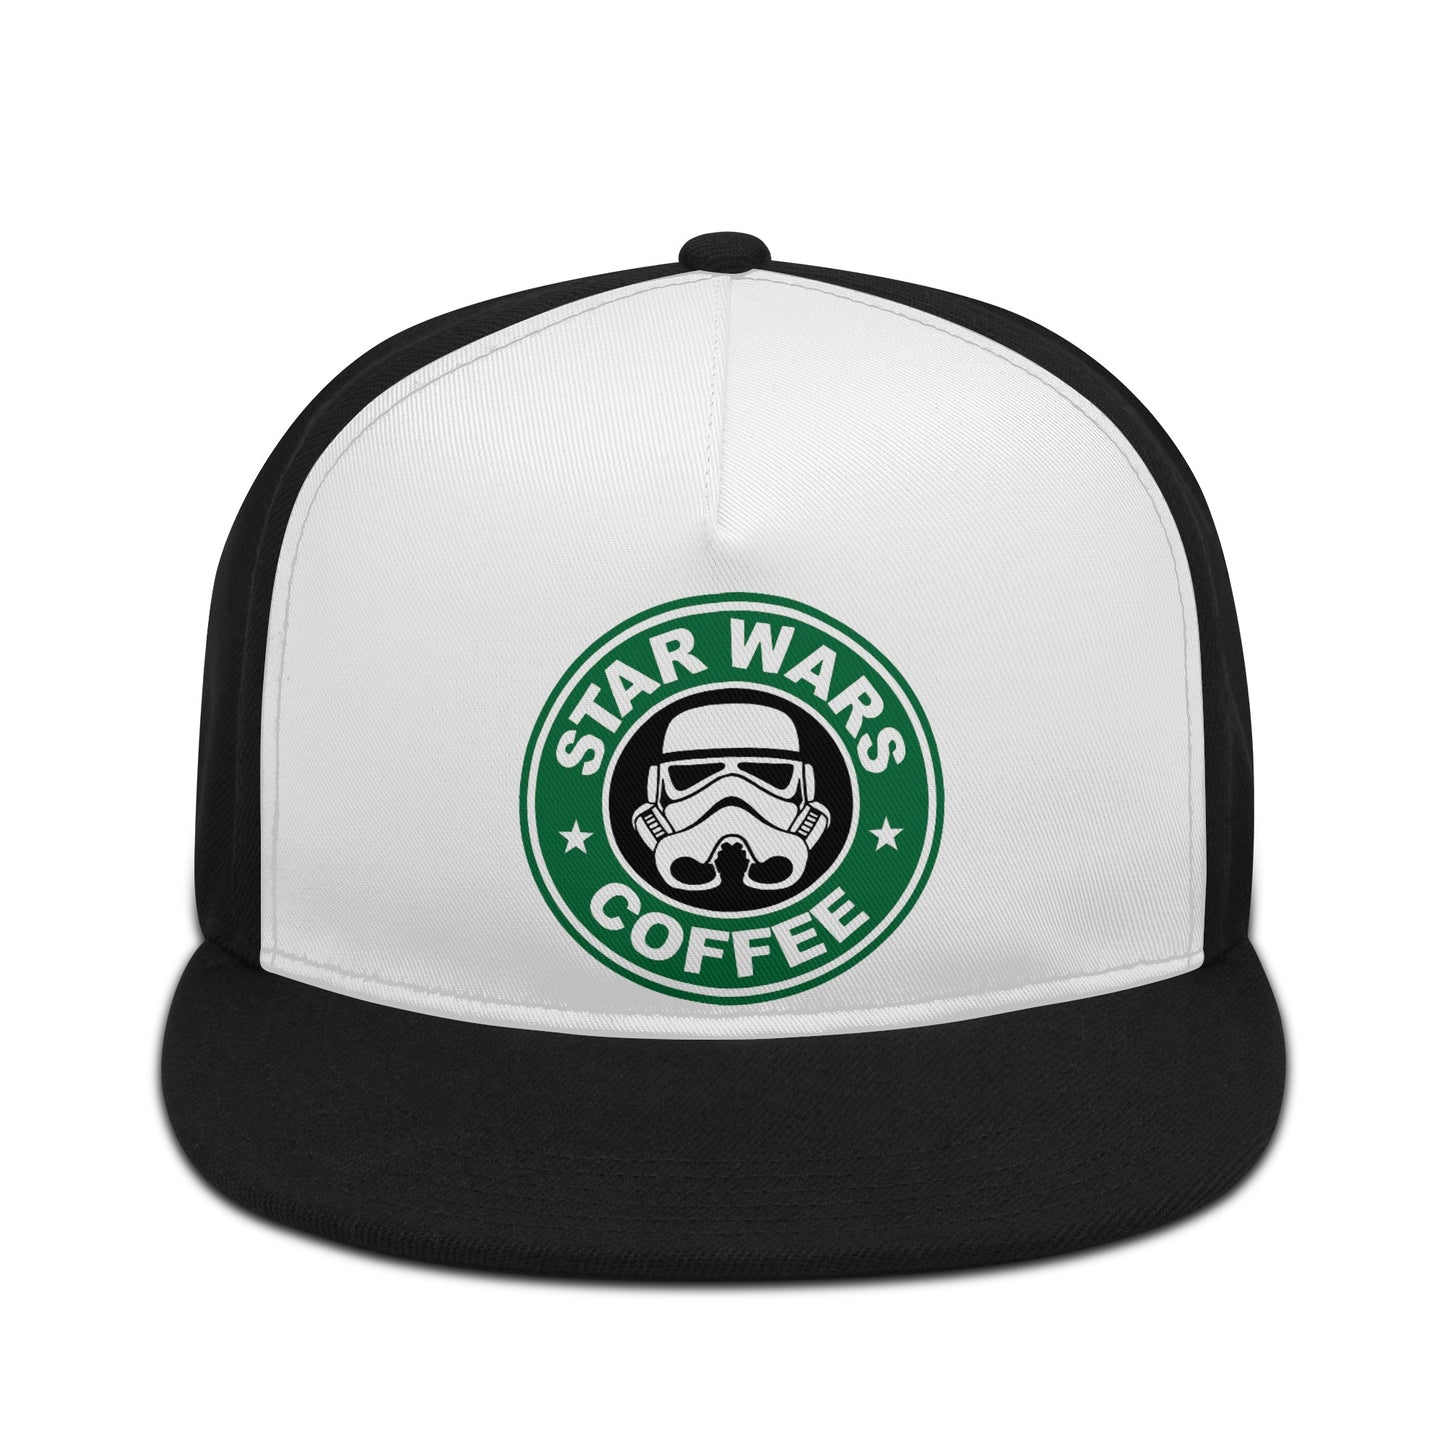 Caps Snapback Star Wars satire logo DrinkandArt